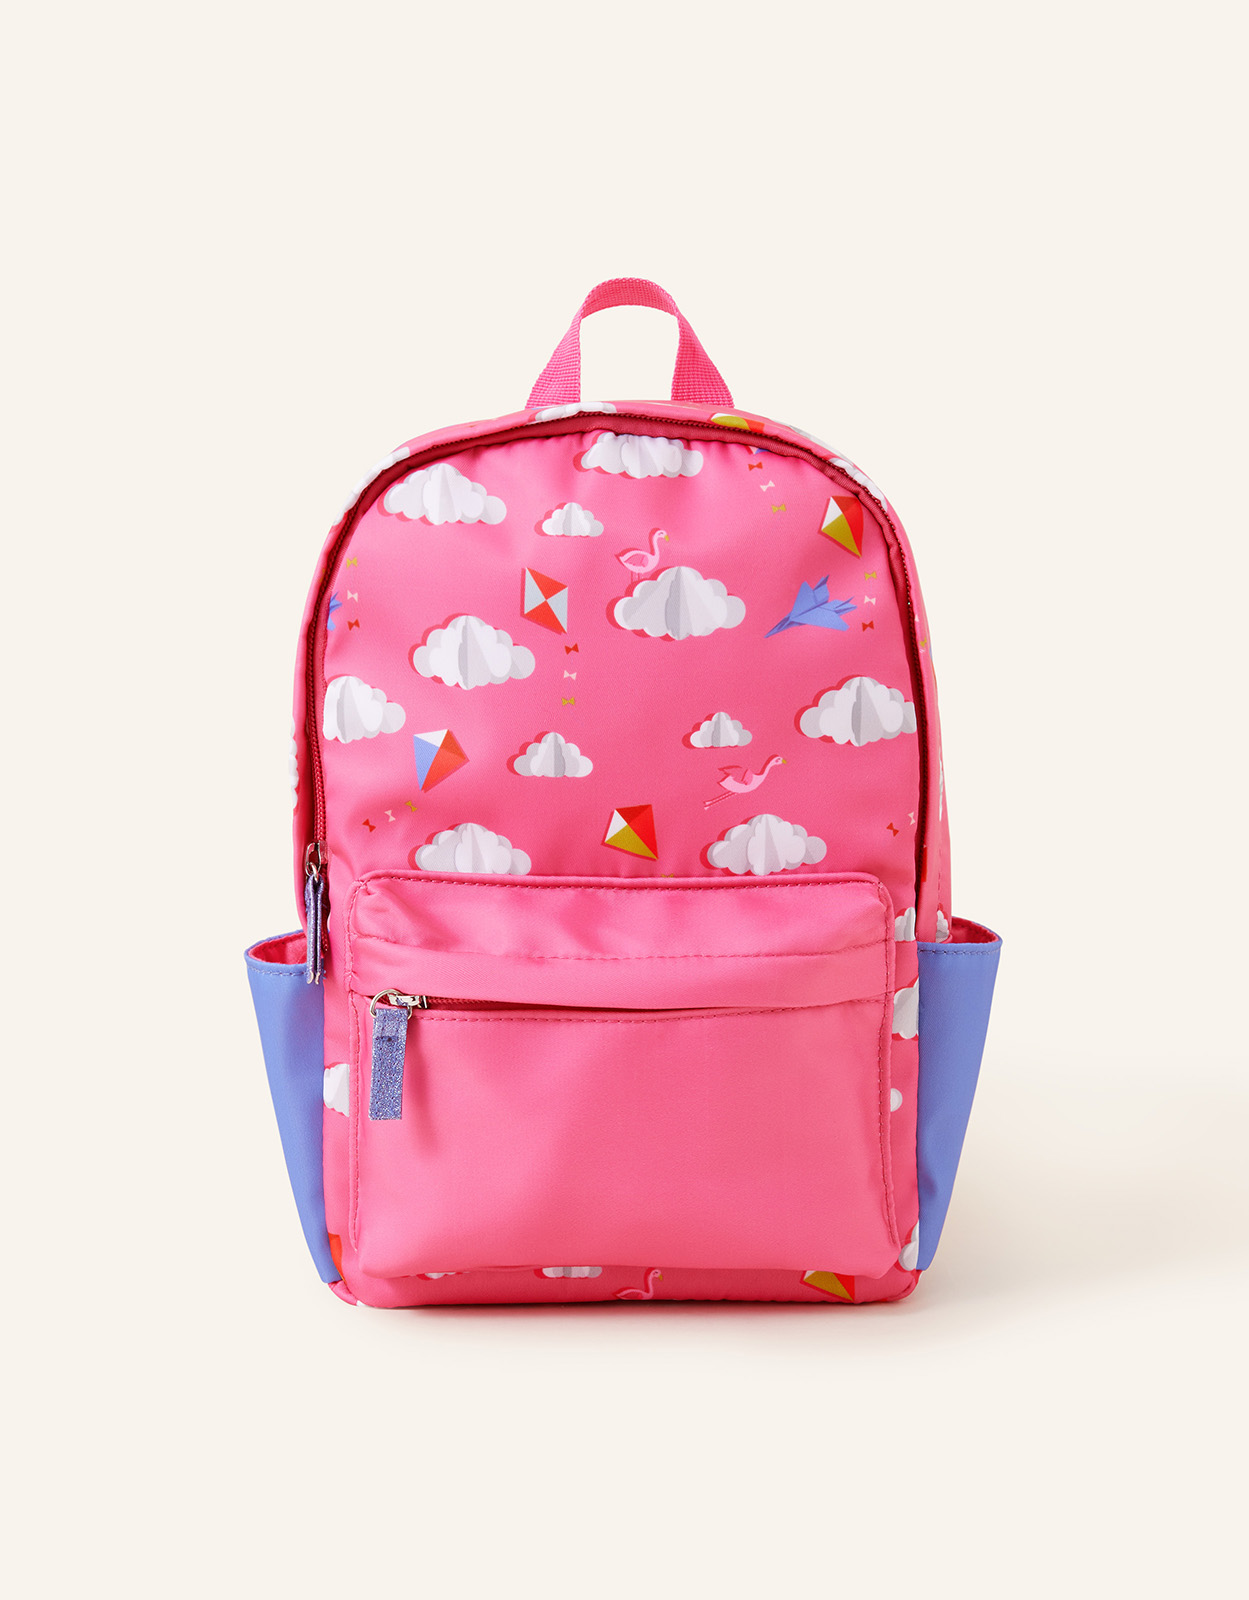 Accessorize Girl's Cloud Print School Bag